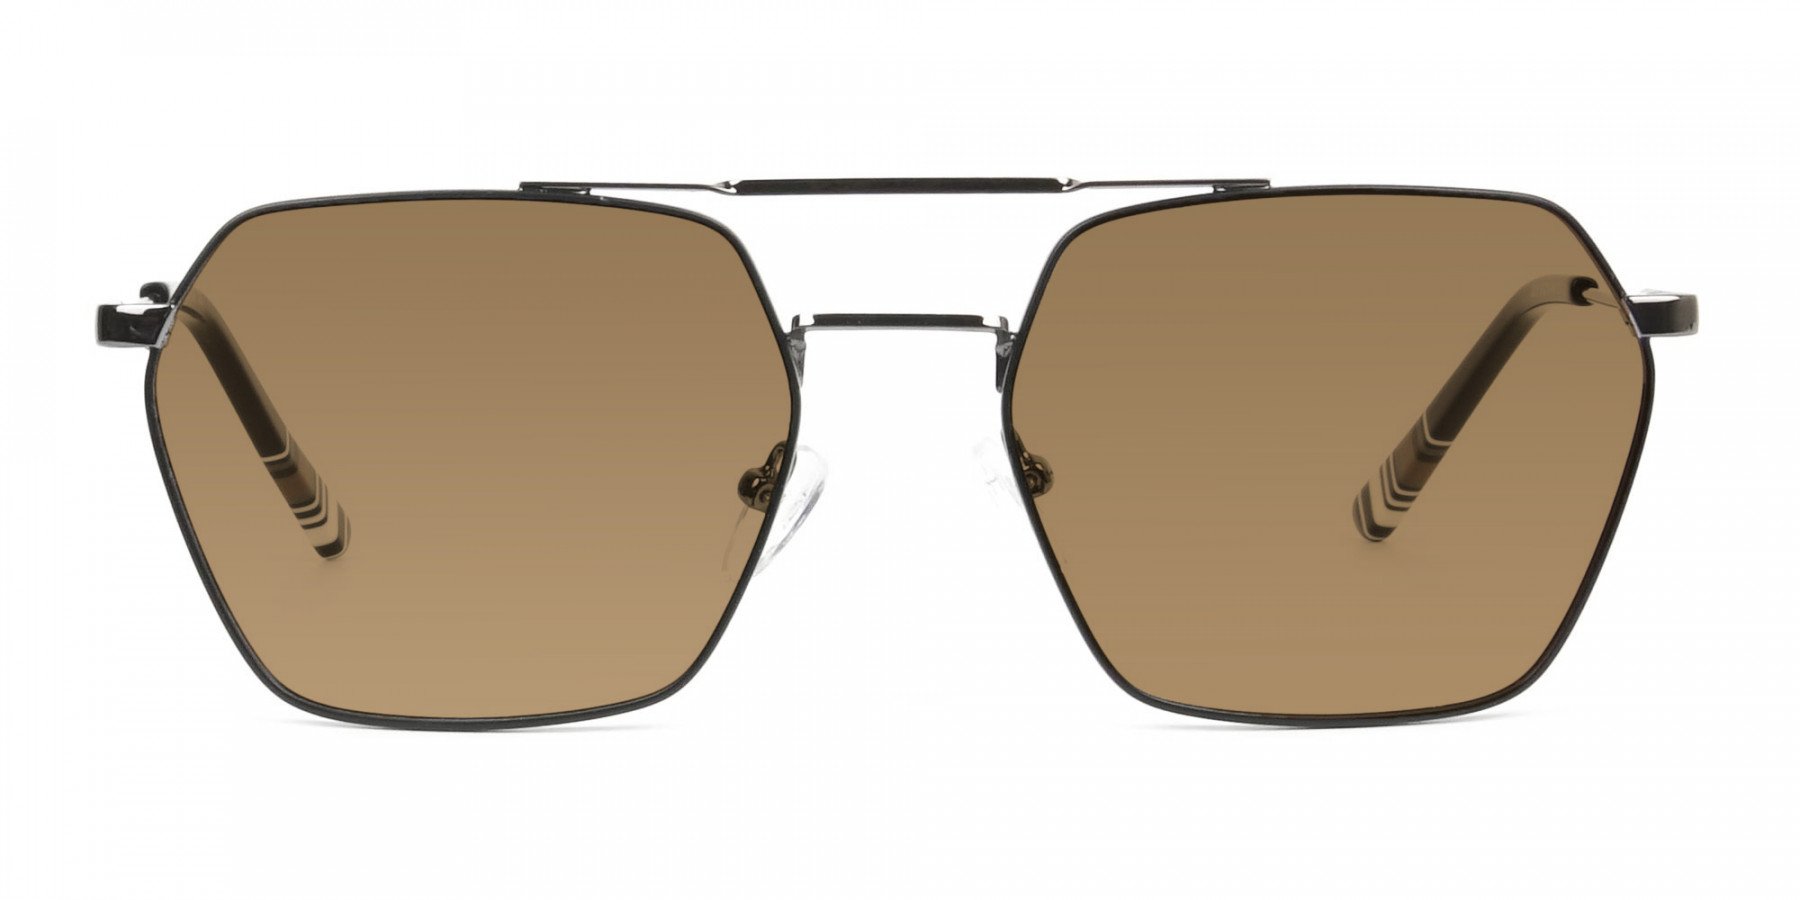 gunmetal-black-geometric-dark-brown-tinted-aviator-sunglasses-1